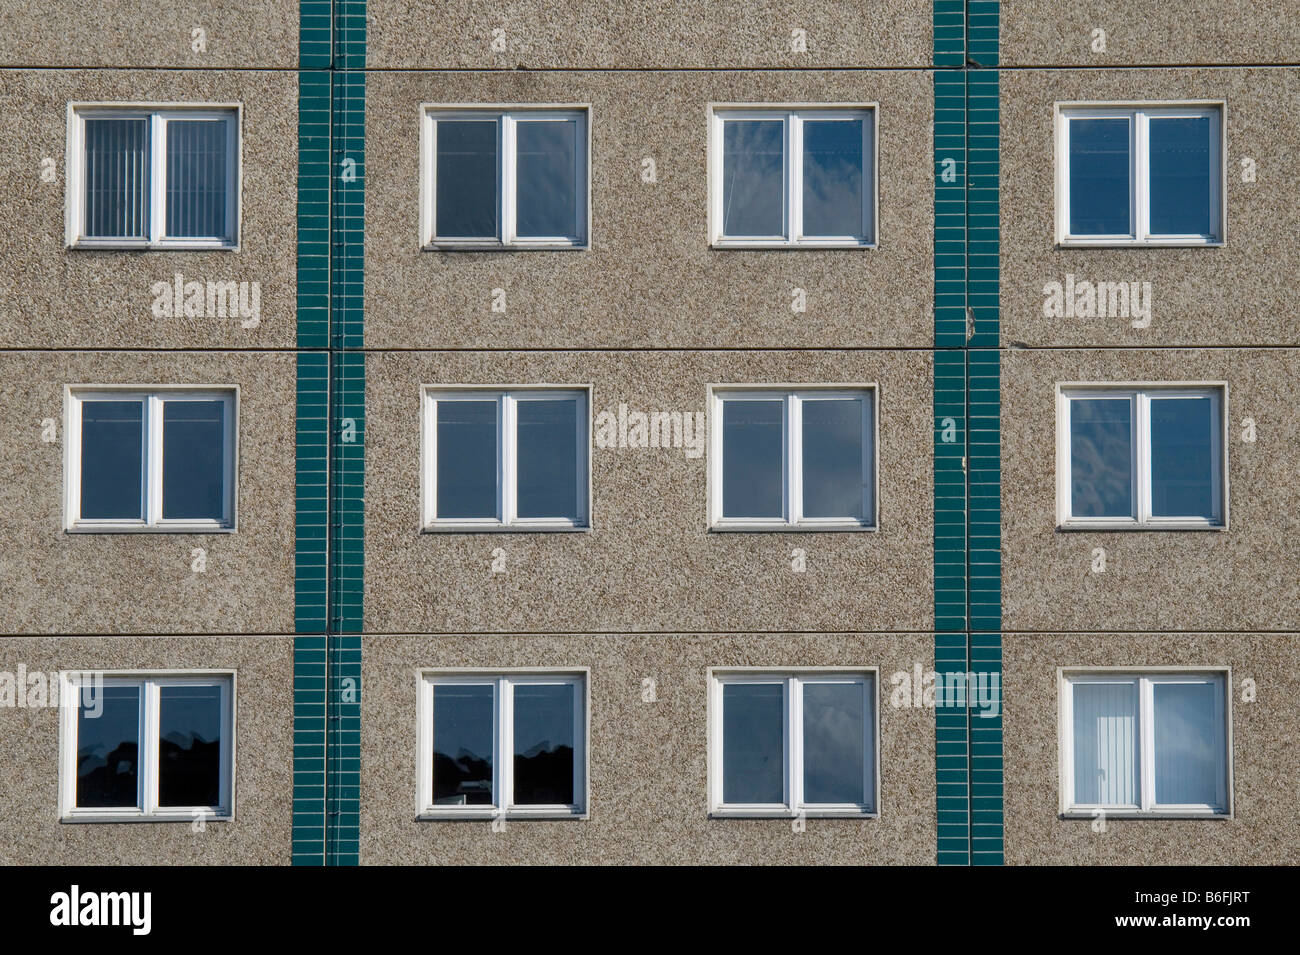 Plattenbau, prefabbricati in cemento, e vista parziale, Berlino, Germania, Europa Foto Stock